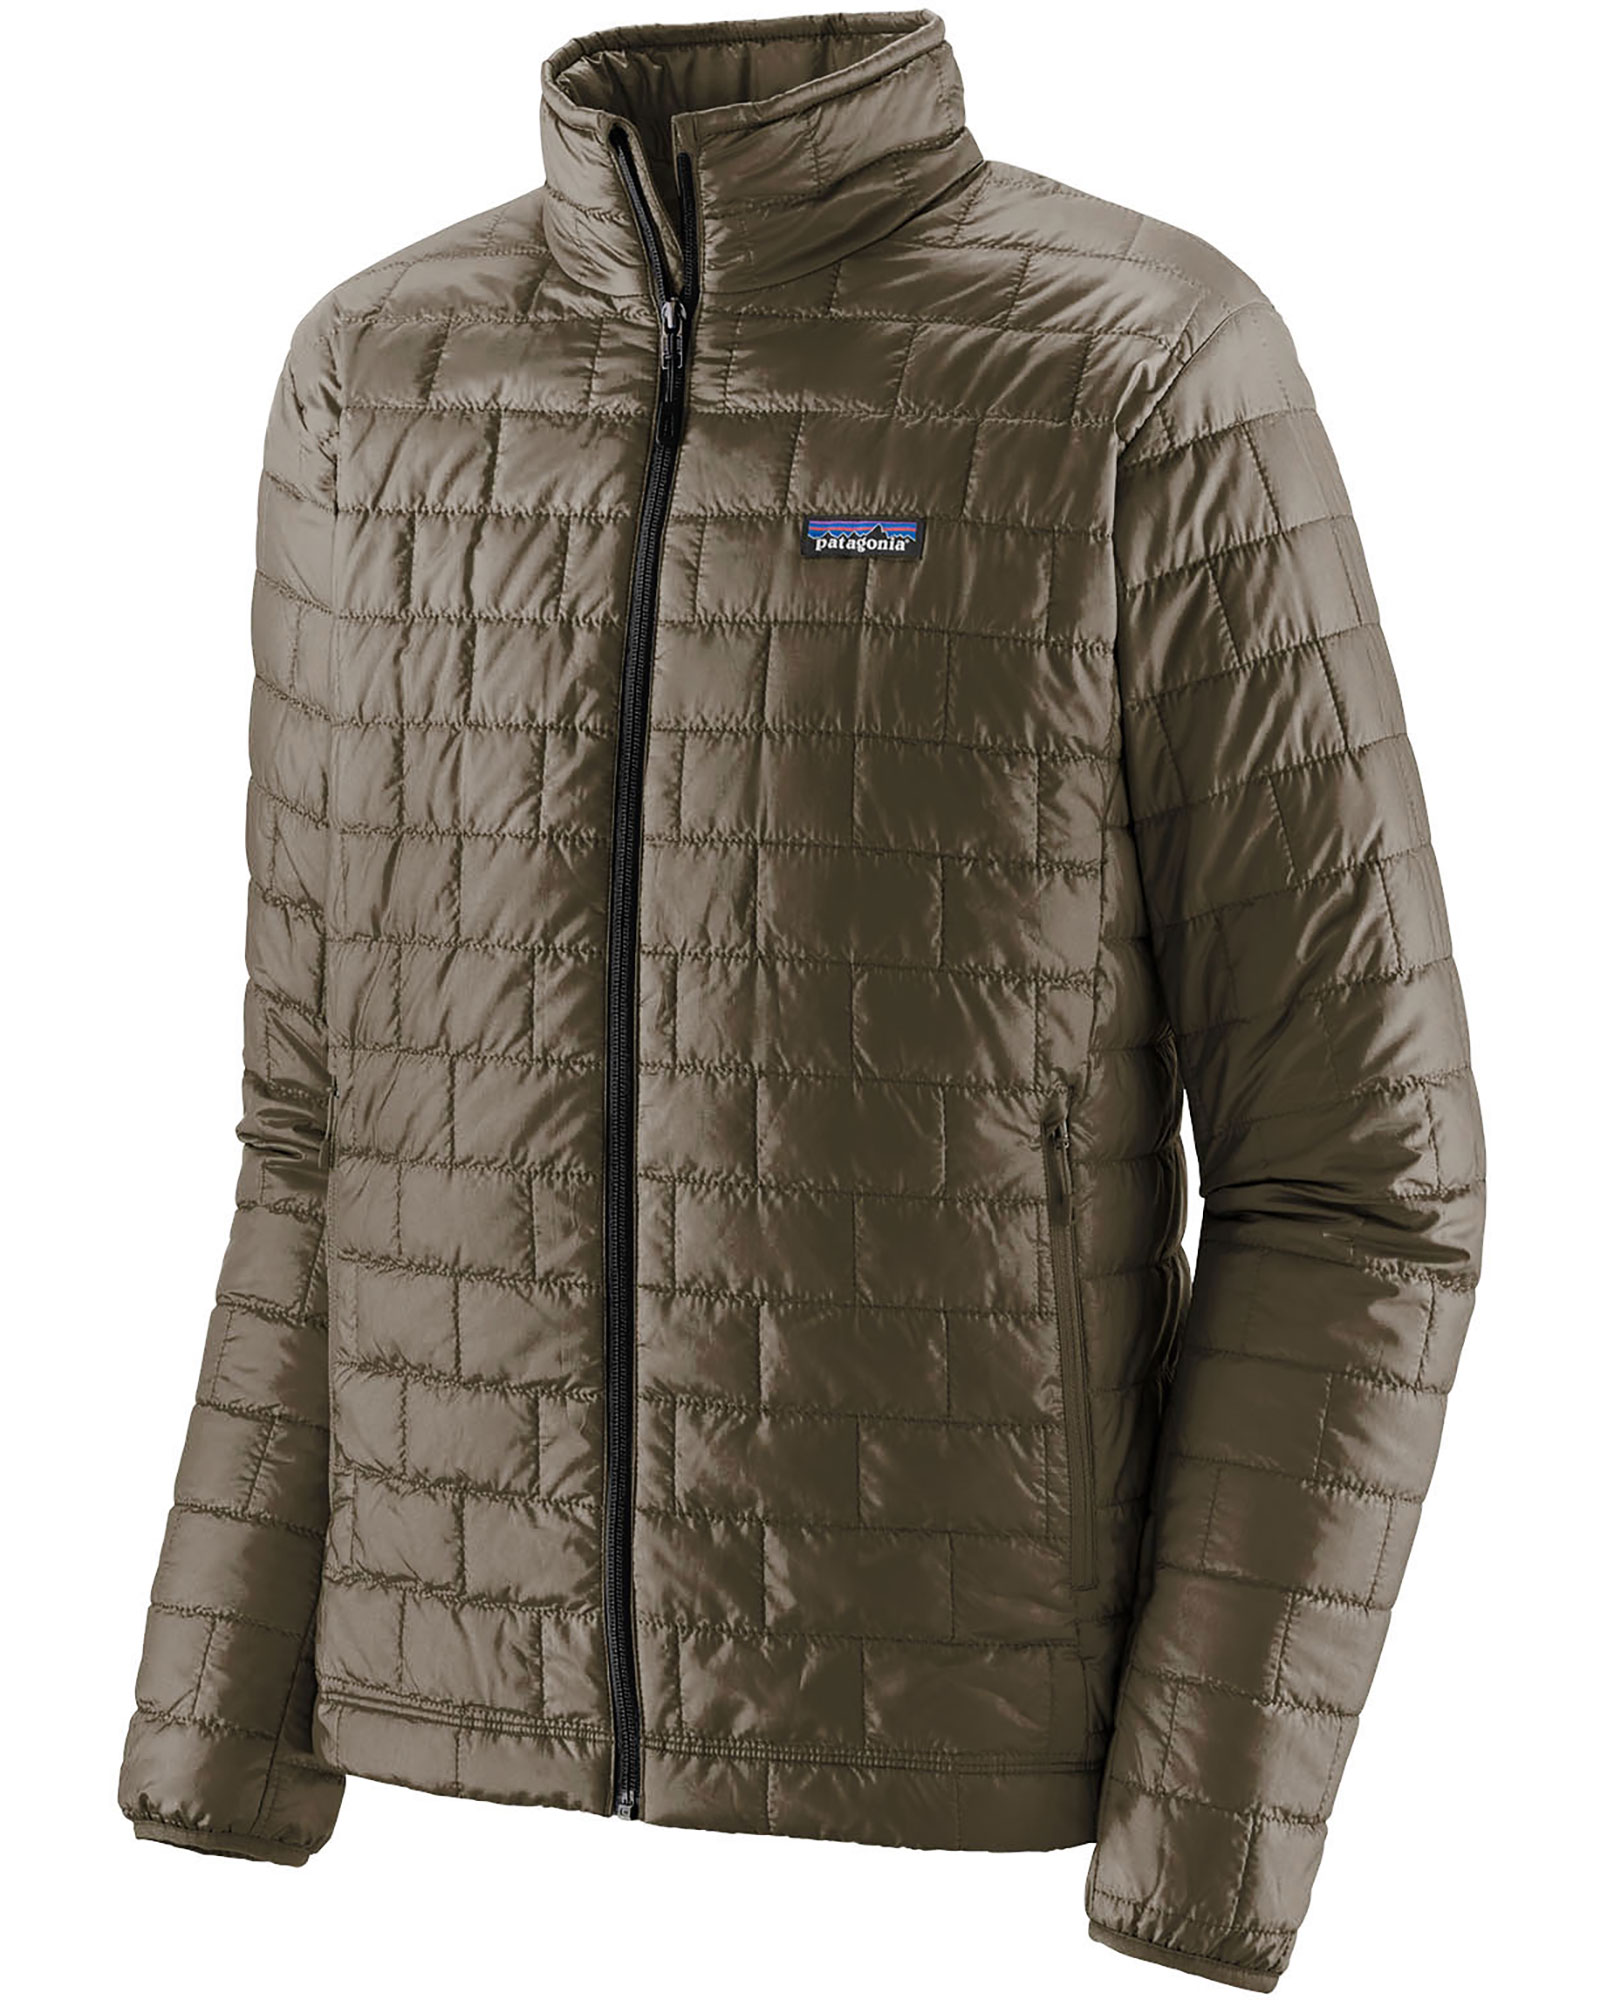 Patagonia Nano Puff Men’s Insulated Jacket - Sage Khaki S